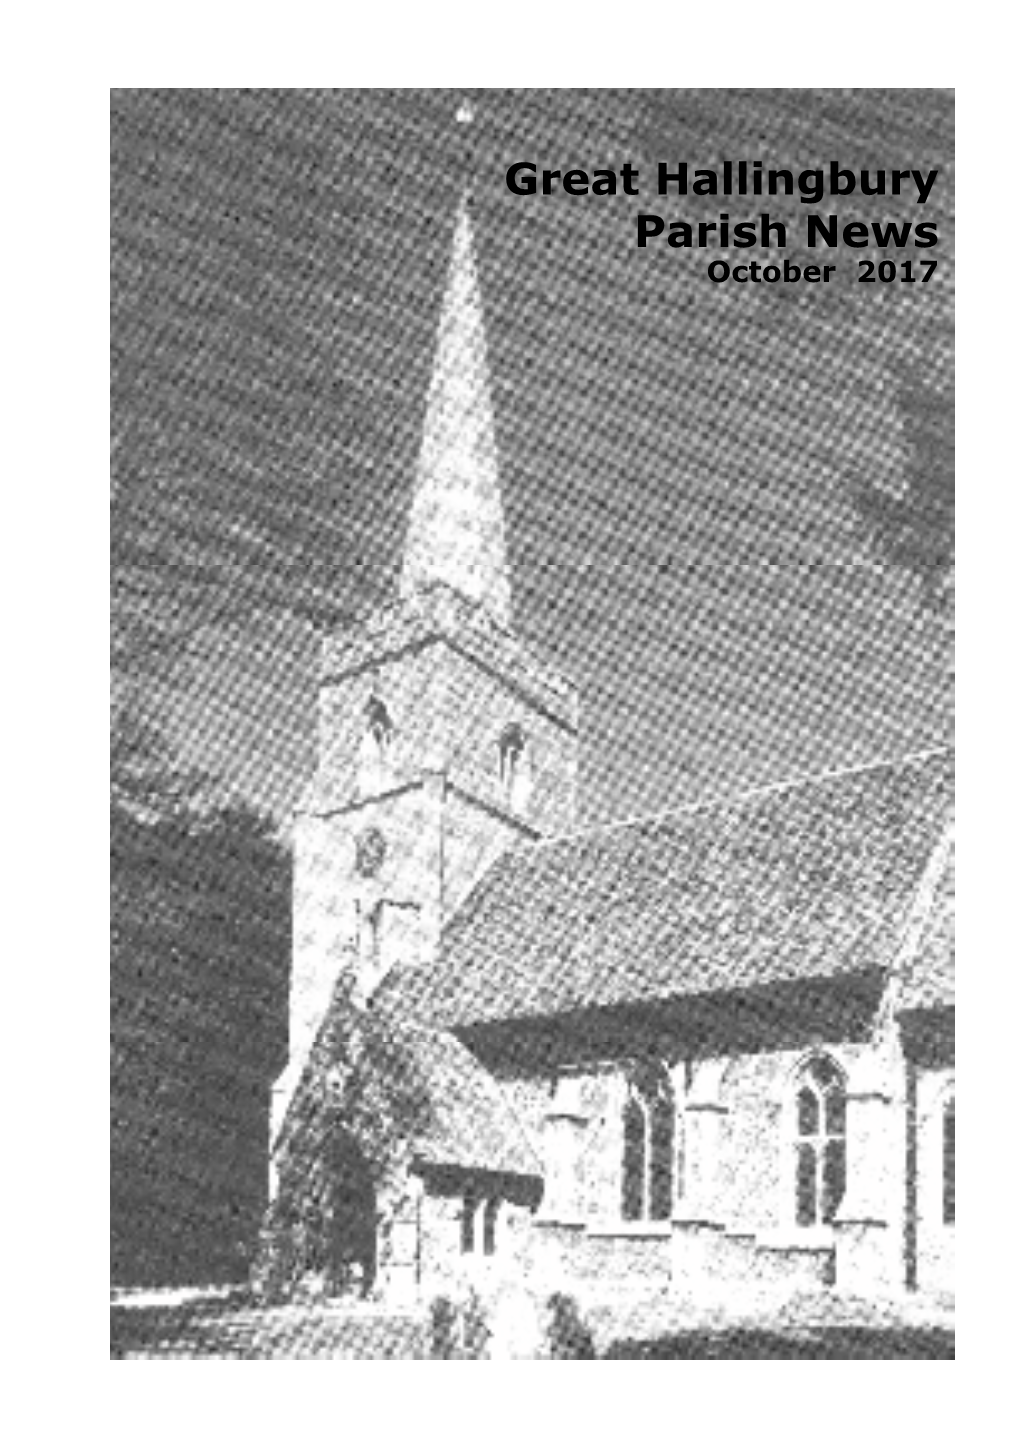 Great Hallingbury Parish News October 2017